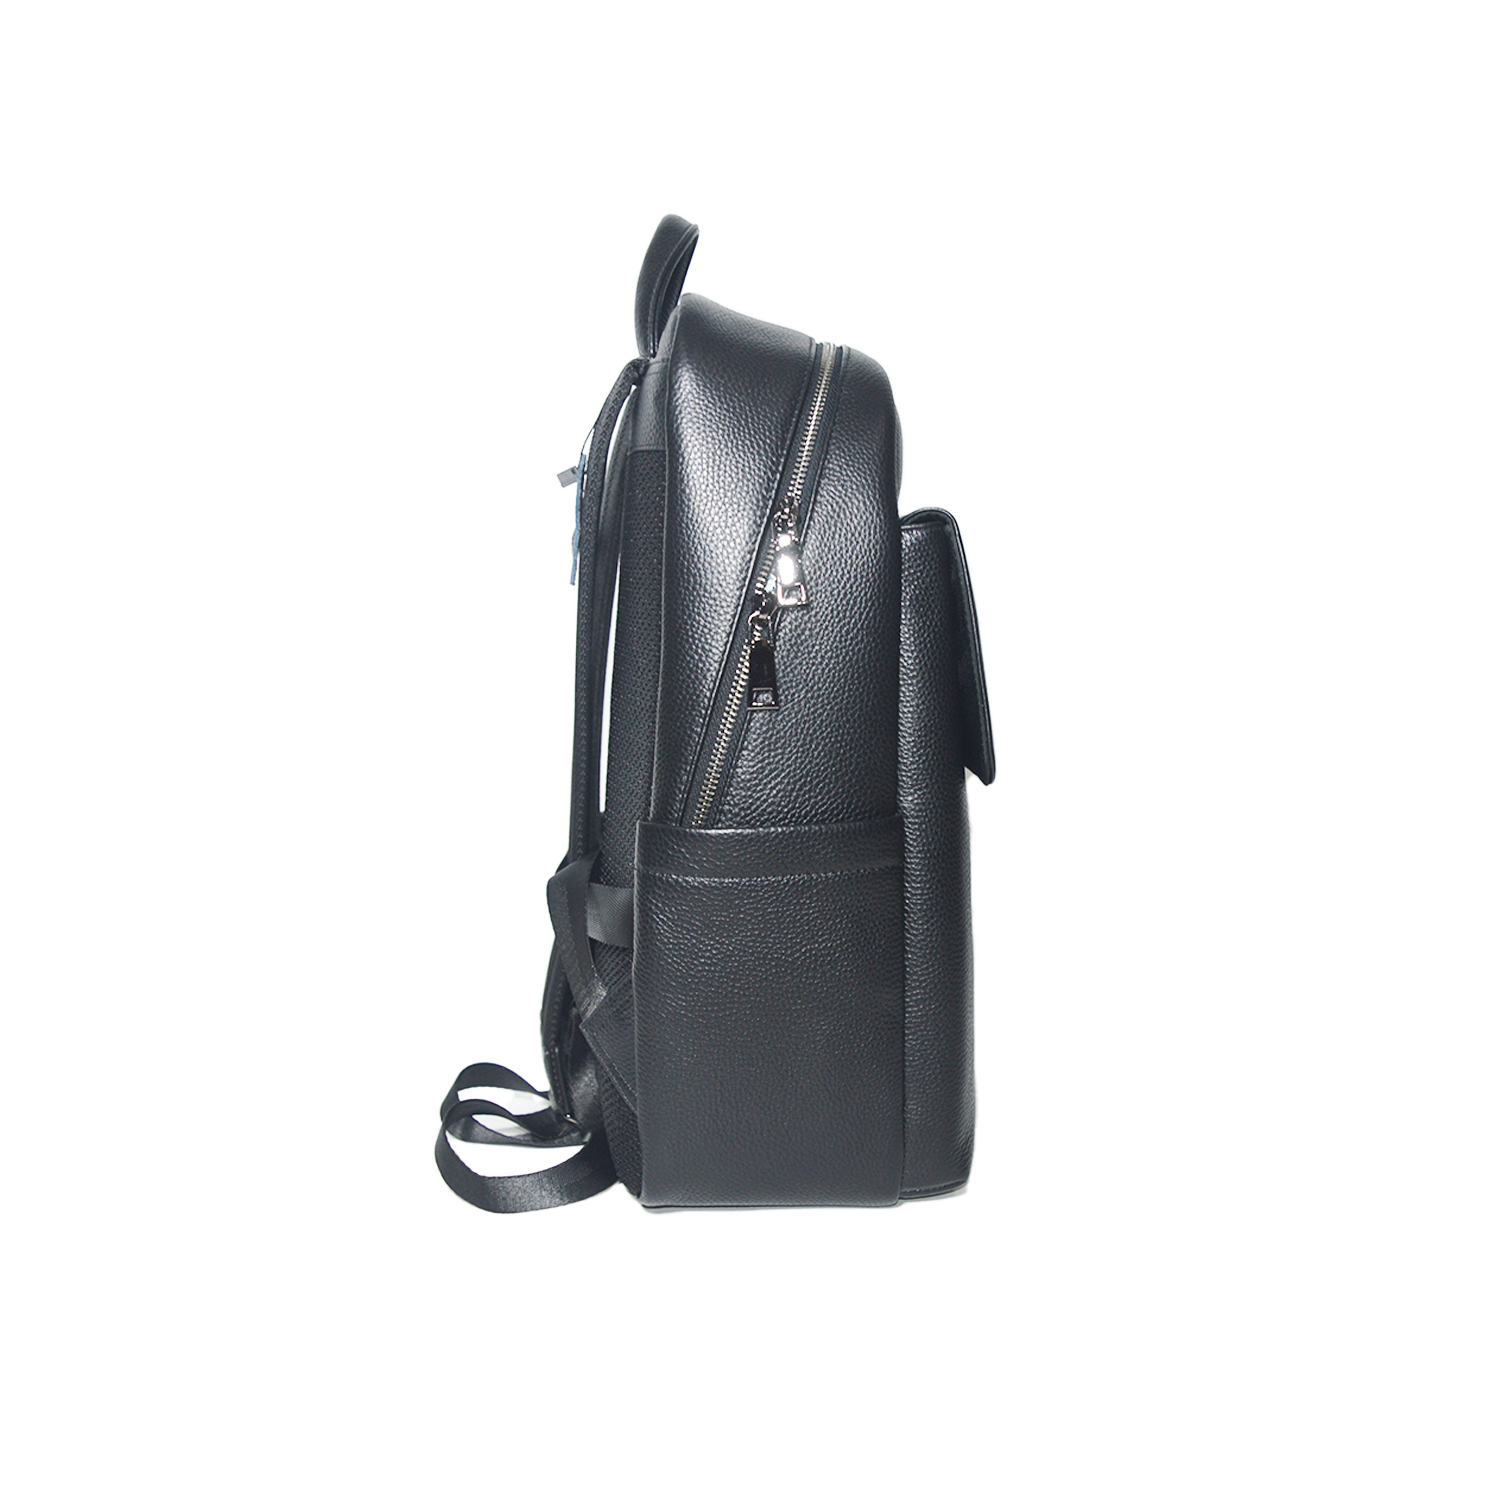 Handmade Black Leather backpack